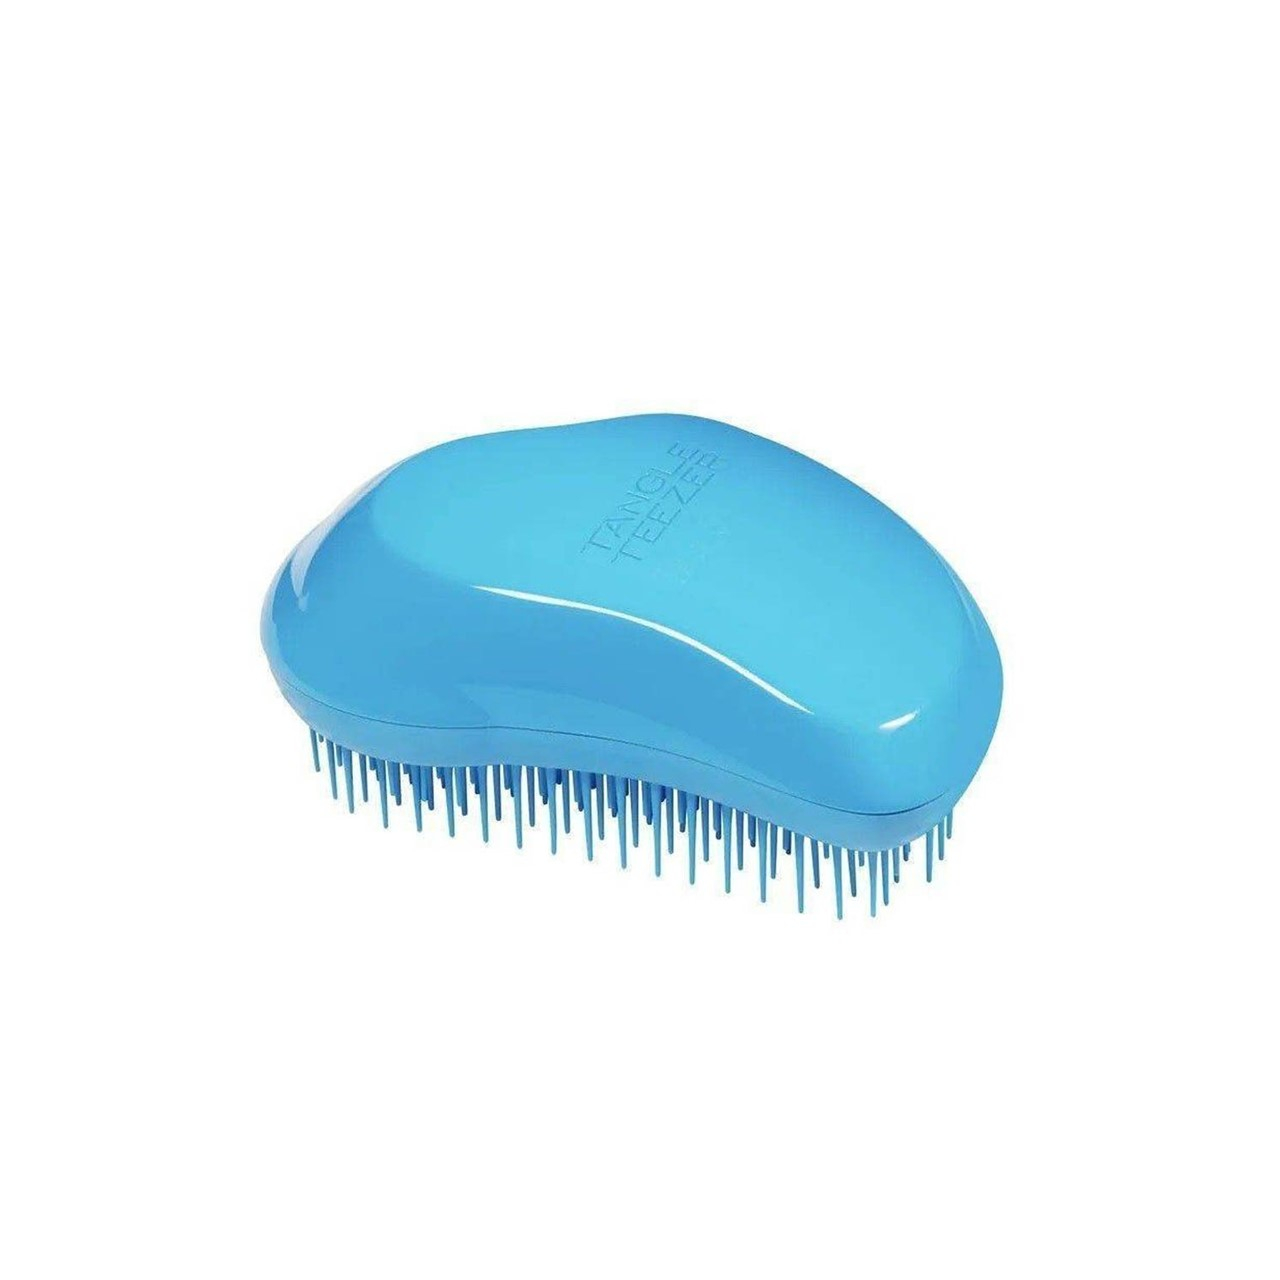 https://static.beautytocare.com/media/catalog/product/t/a/tangle-teezer-original-thick-curly-azure-blue.jpg